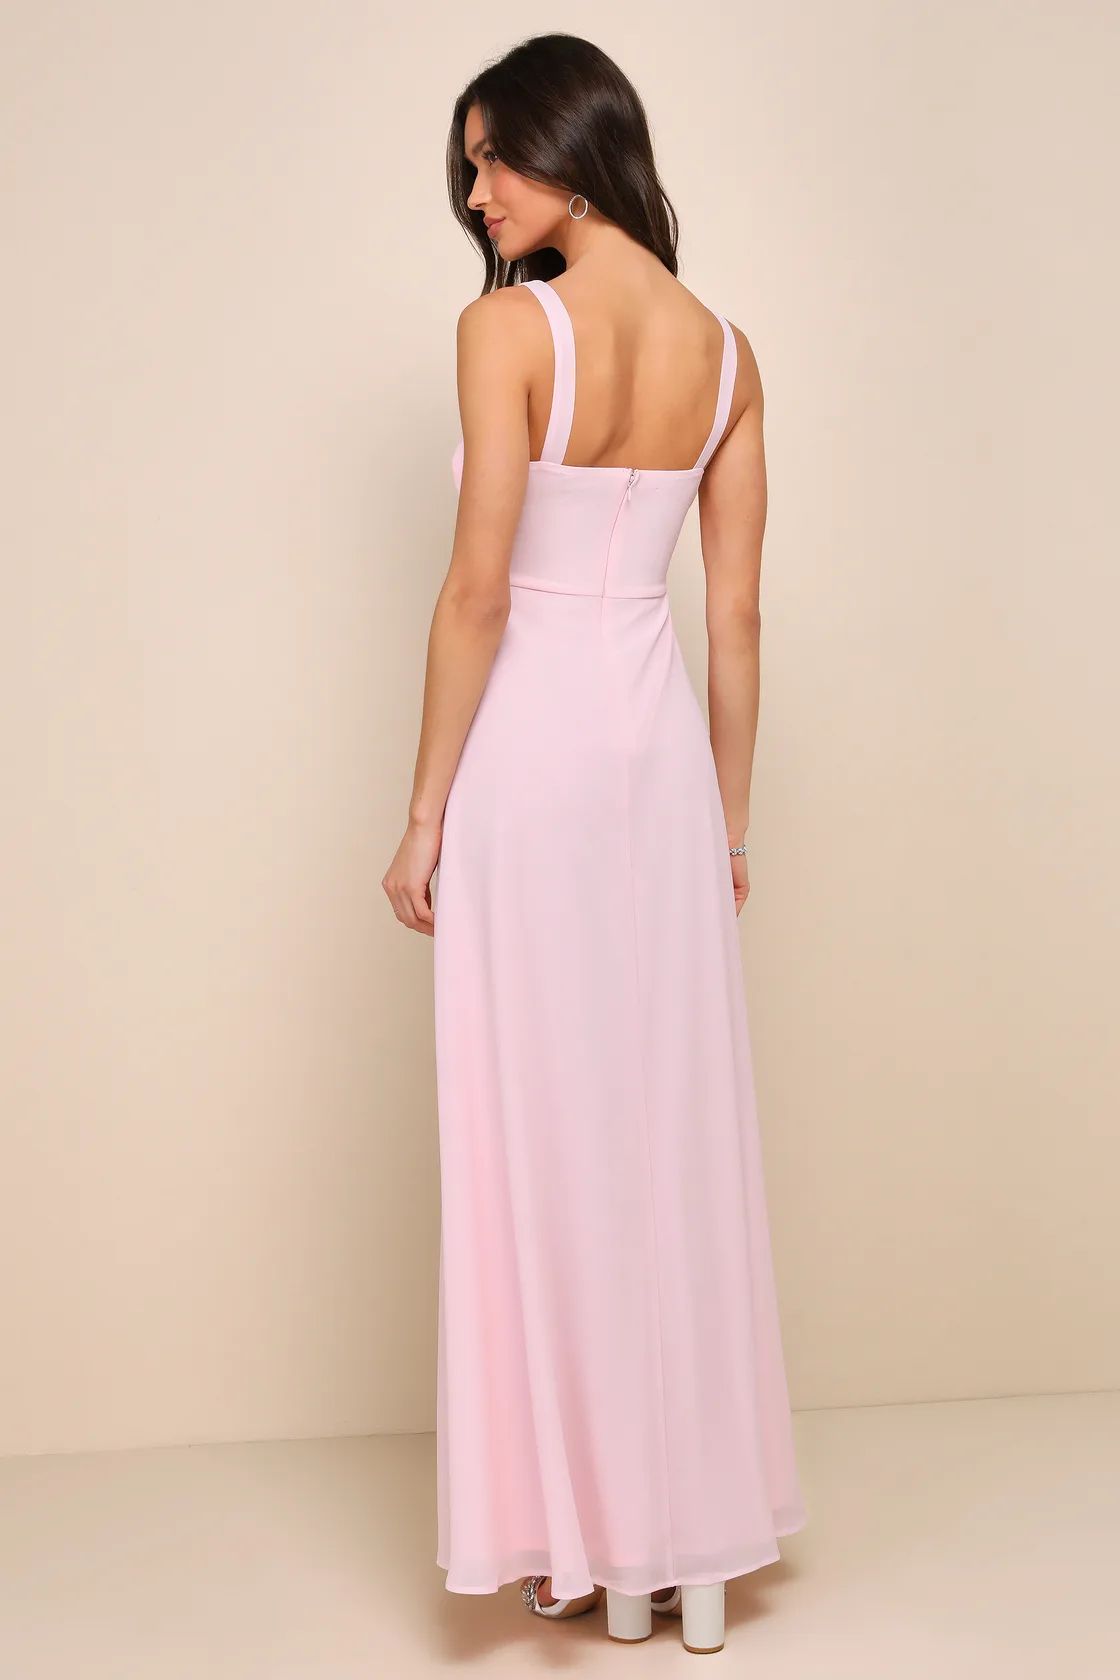 Remarkable Arrival Light Pink Sleeveless Maxi Dress | Lulus